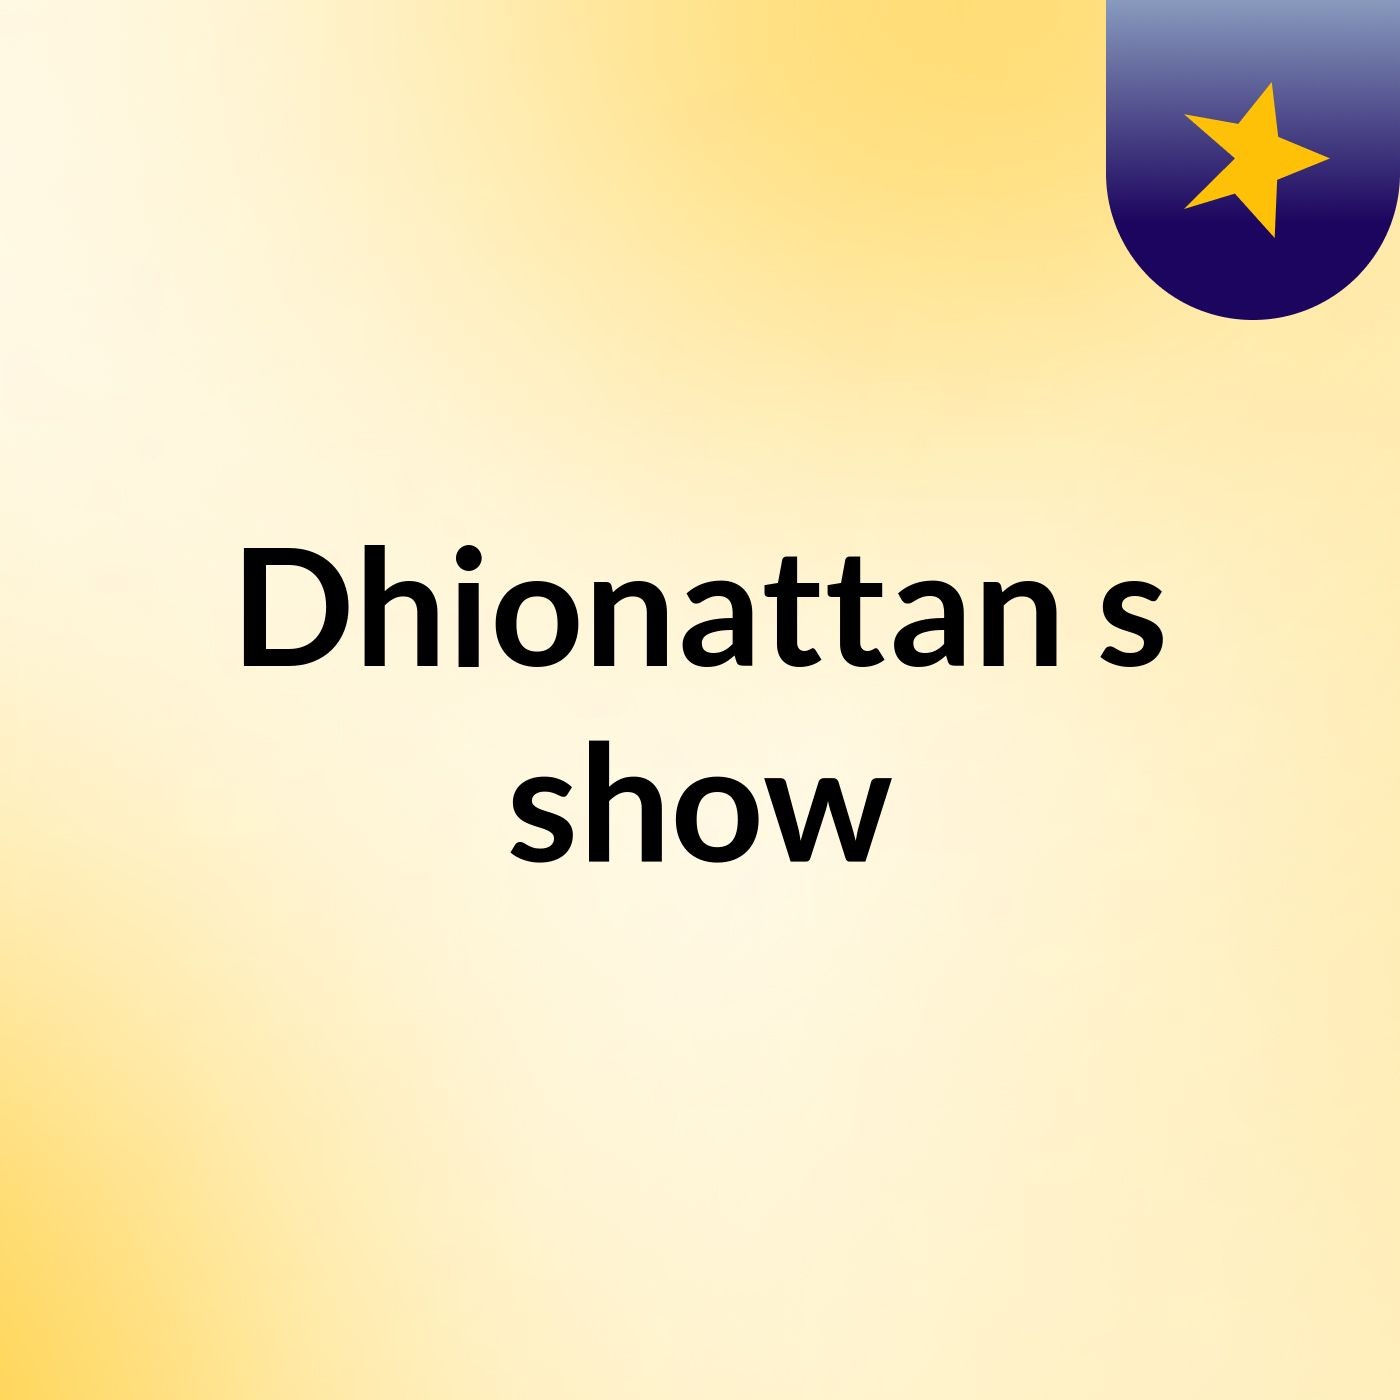 Dhionattan's show